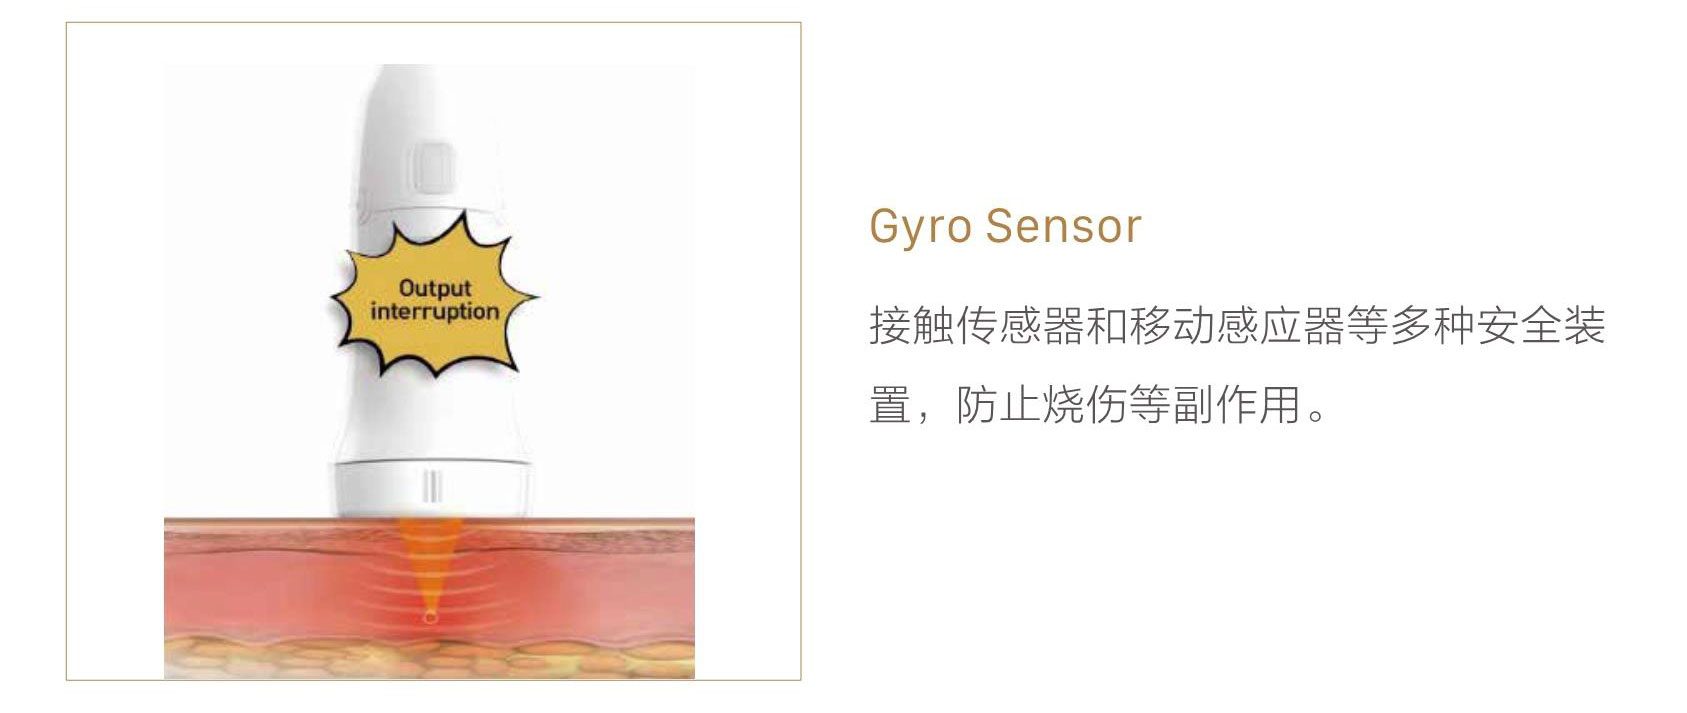 Gyro Sensor